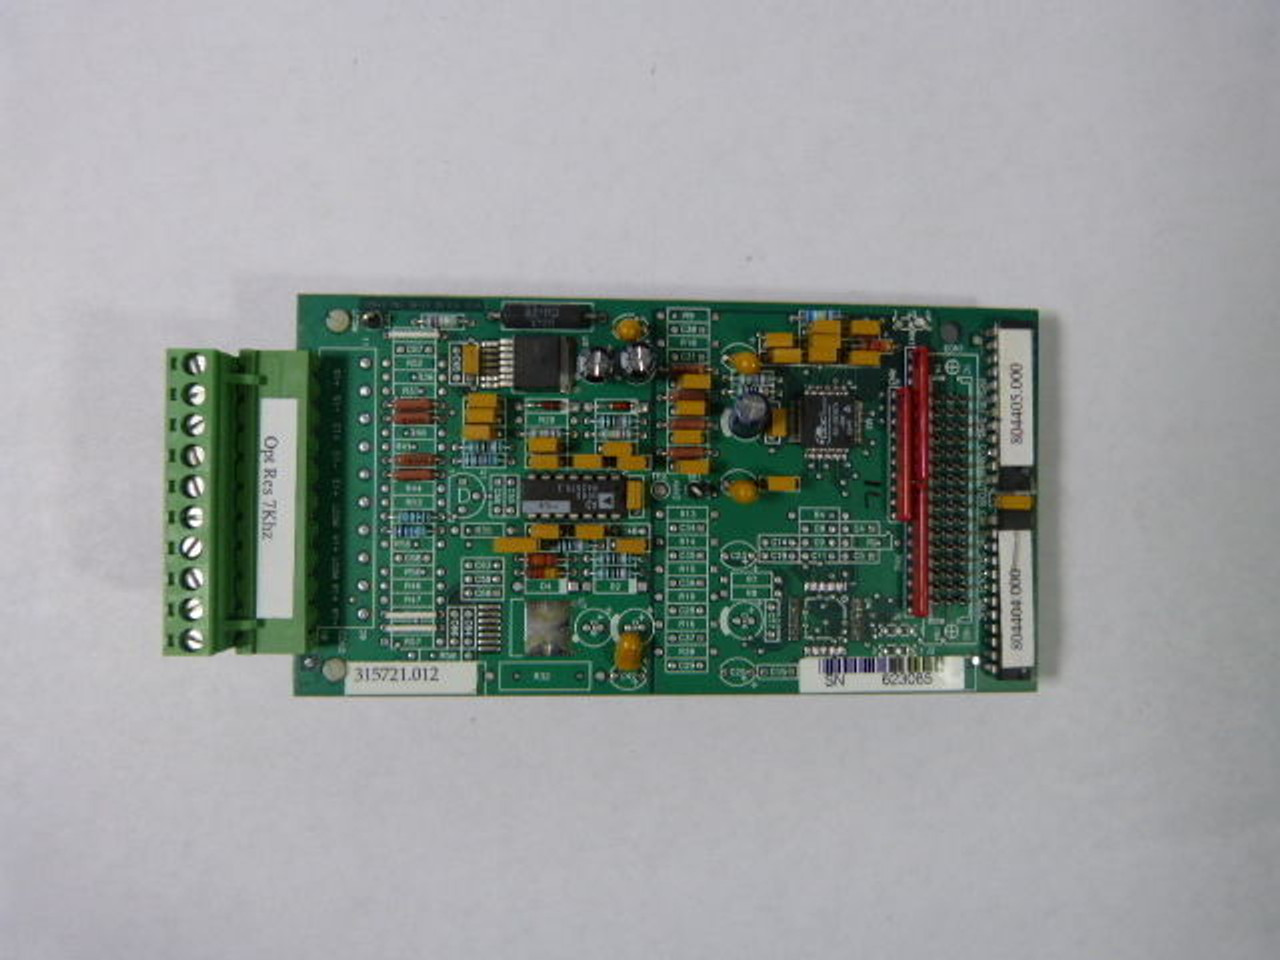 Unico 315721.012 Control Board Feedback Module USED